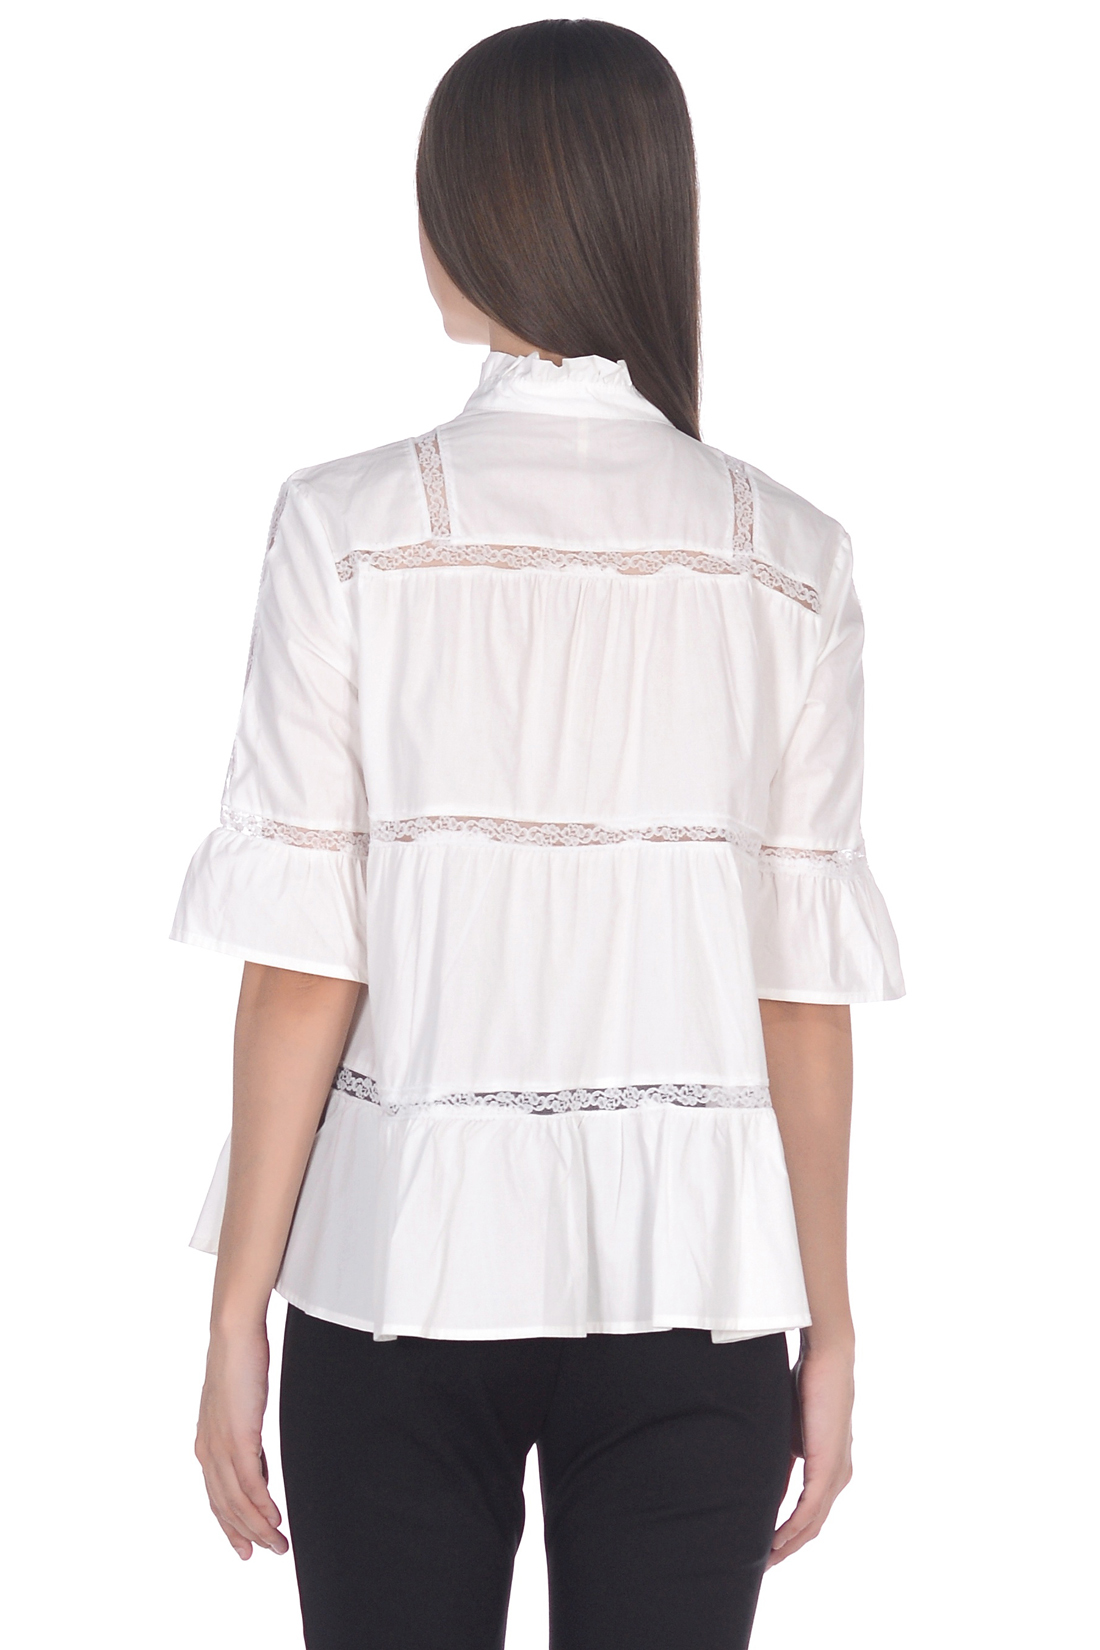 Ярусная блузка с кружевными прошвами (арт. baon B179044), размер XL, цвет белый Ярусная блузка с кружевными прошвами (арт. baon B179044) - фото 3